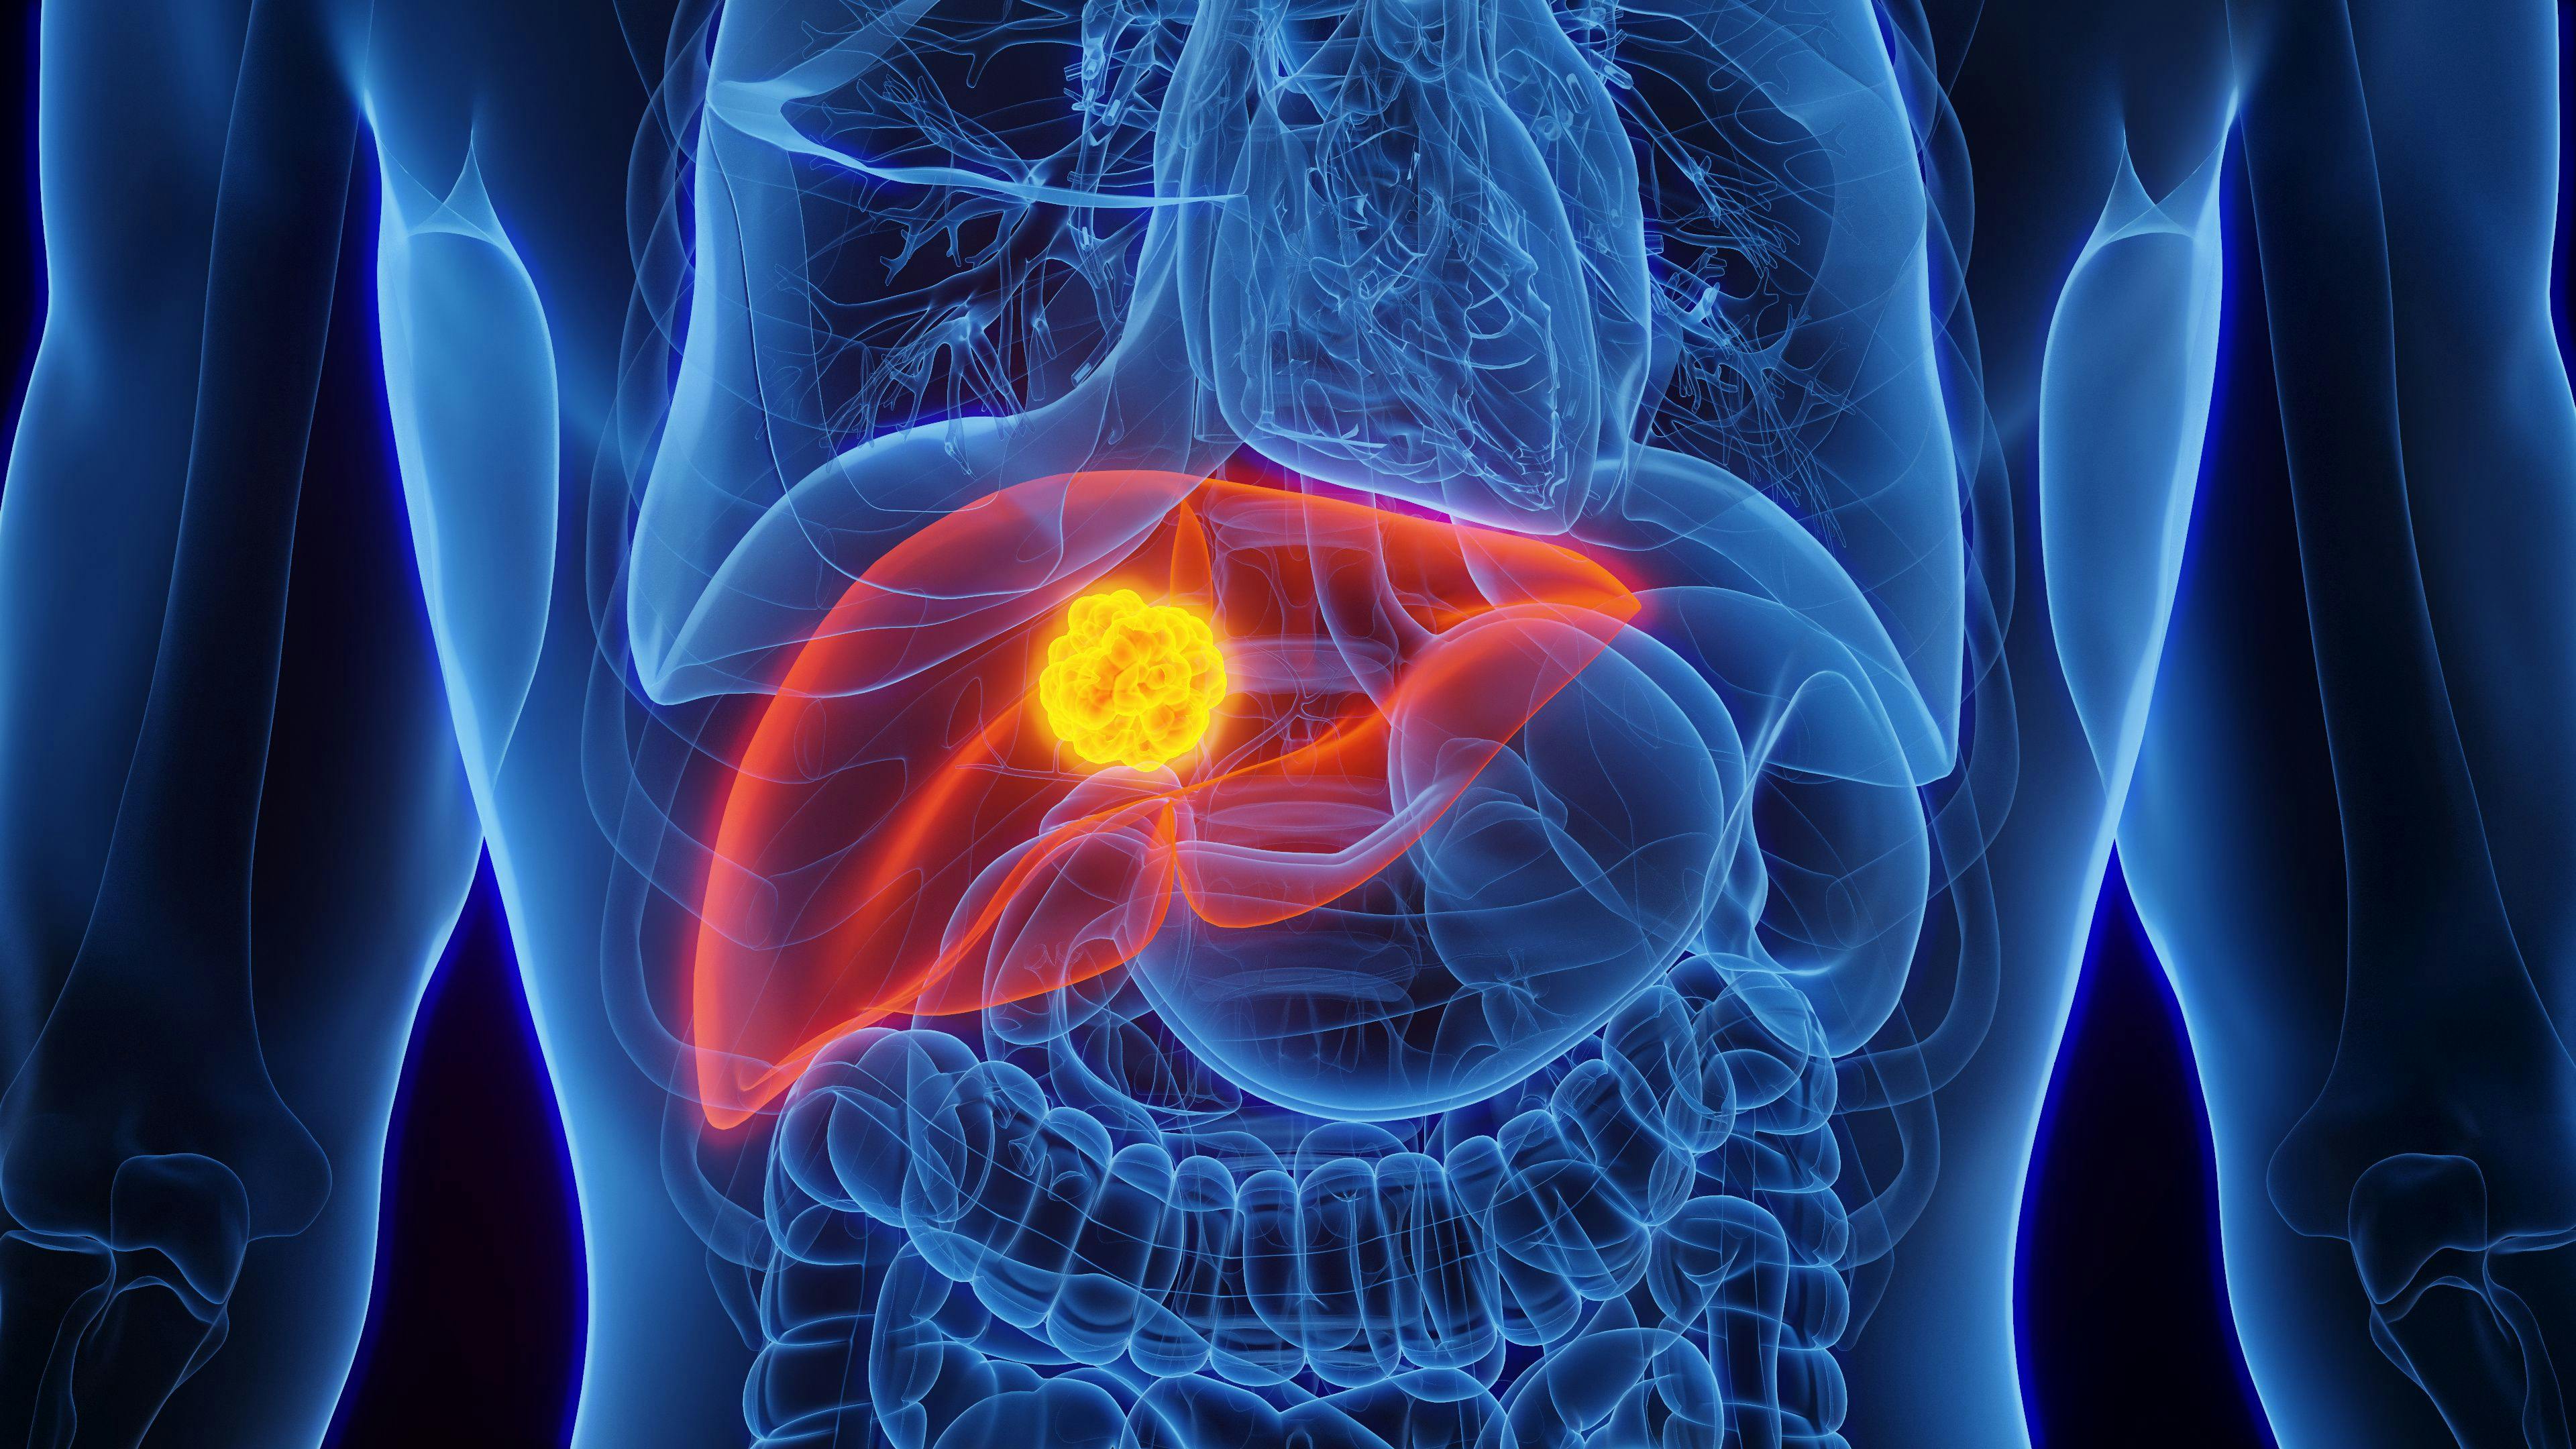 3D rendering of human liver: ©SciePro - stock.adobe.com